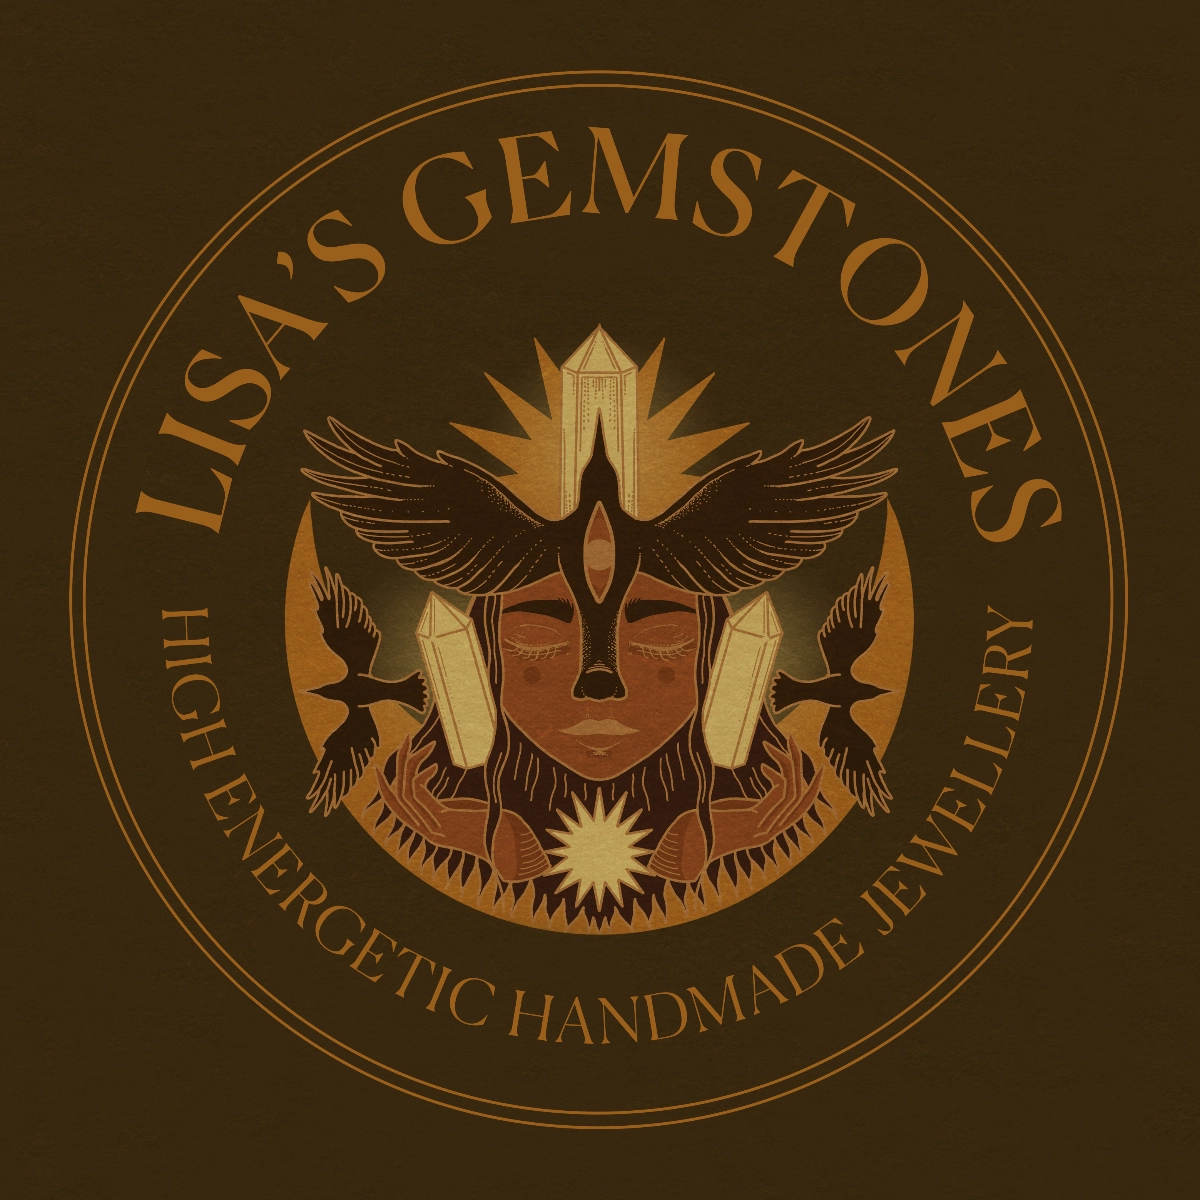 lisas-gemstones-logo-design